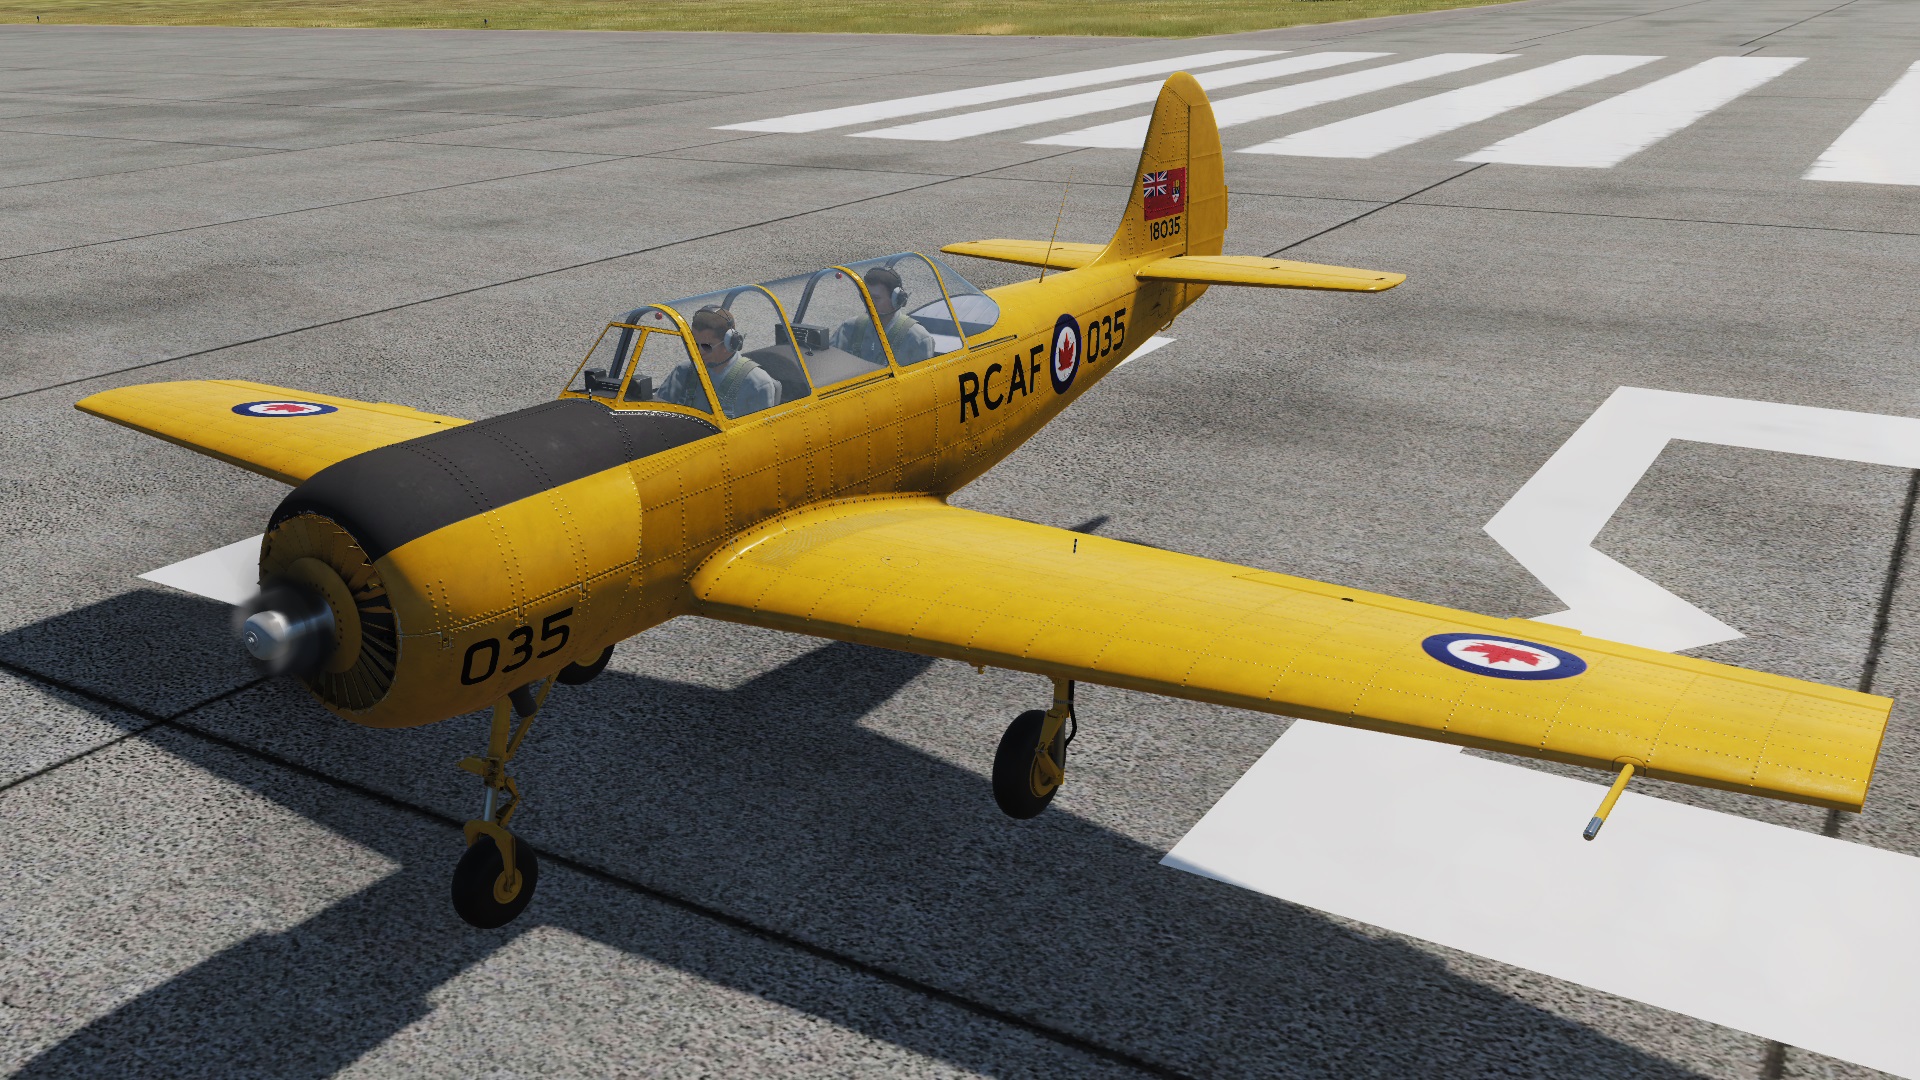 RCAF Fictional Yak-52 Livery